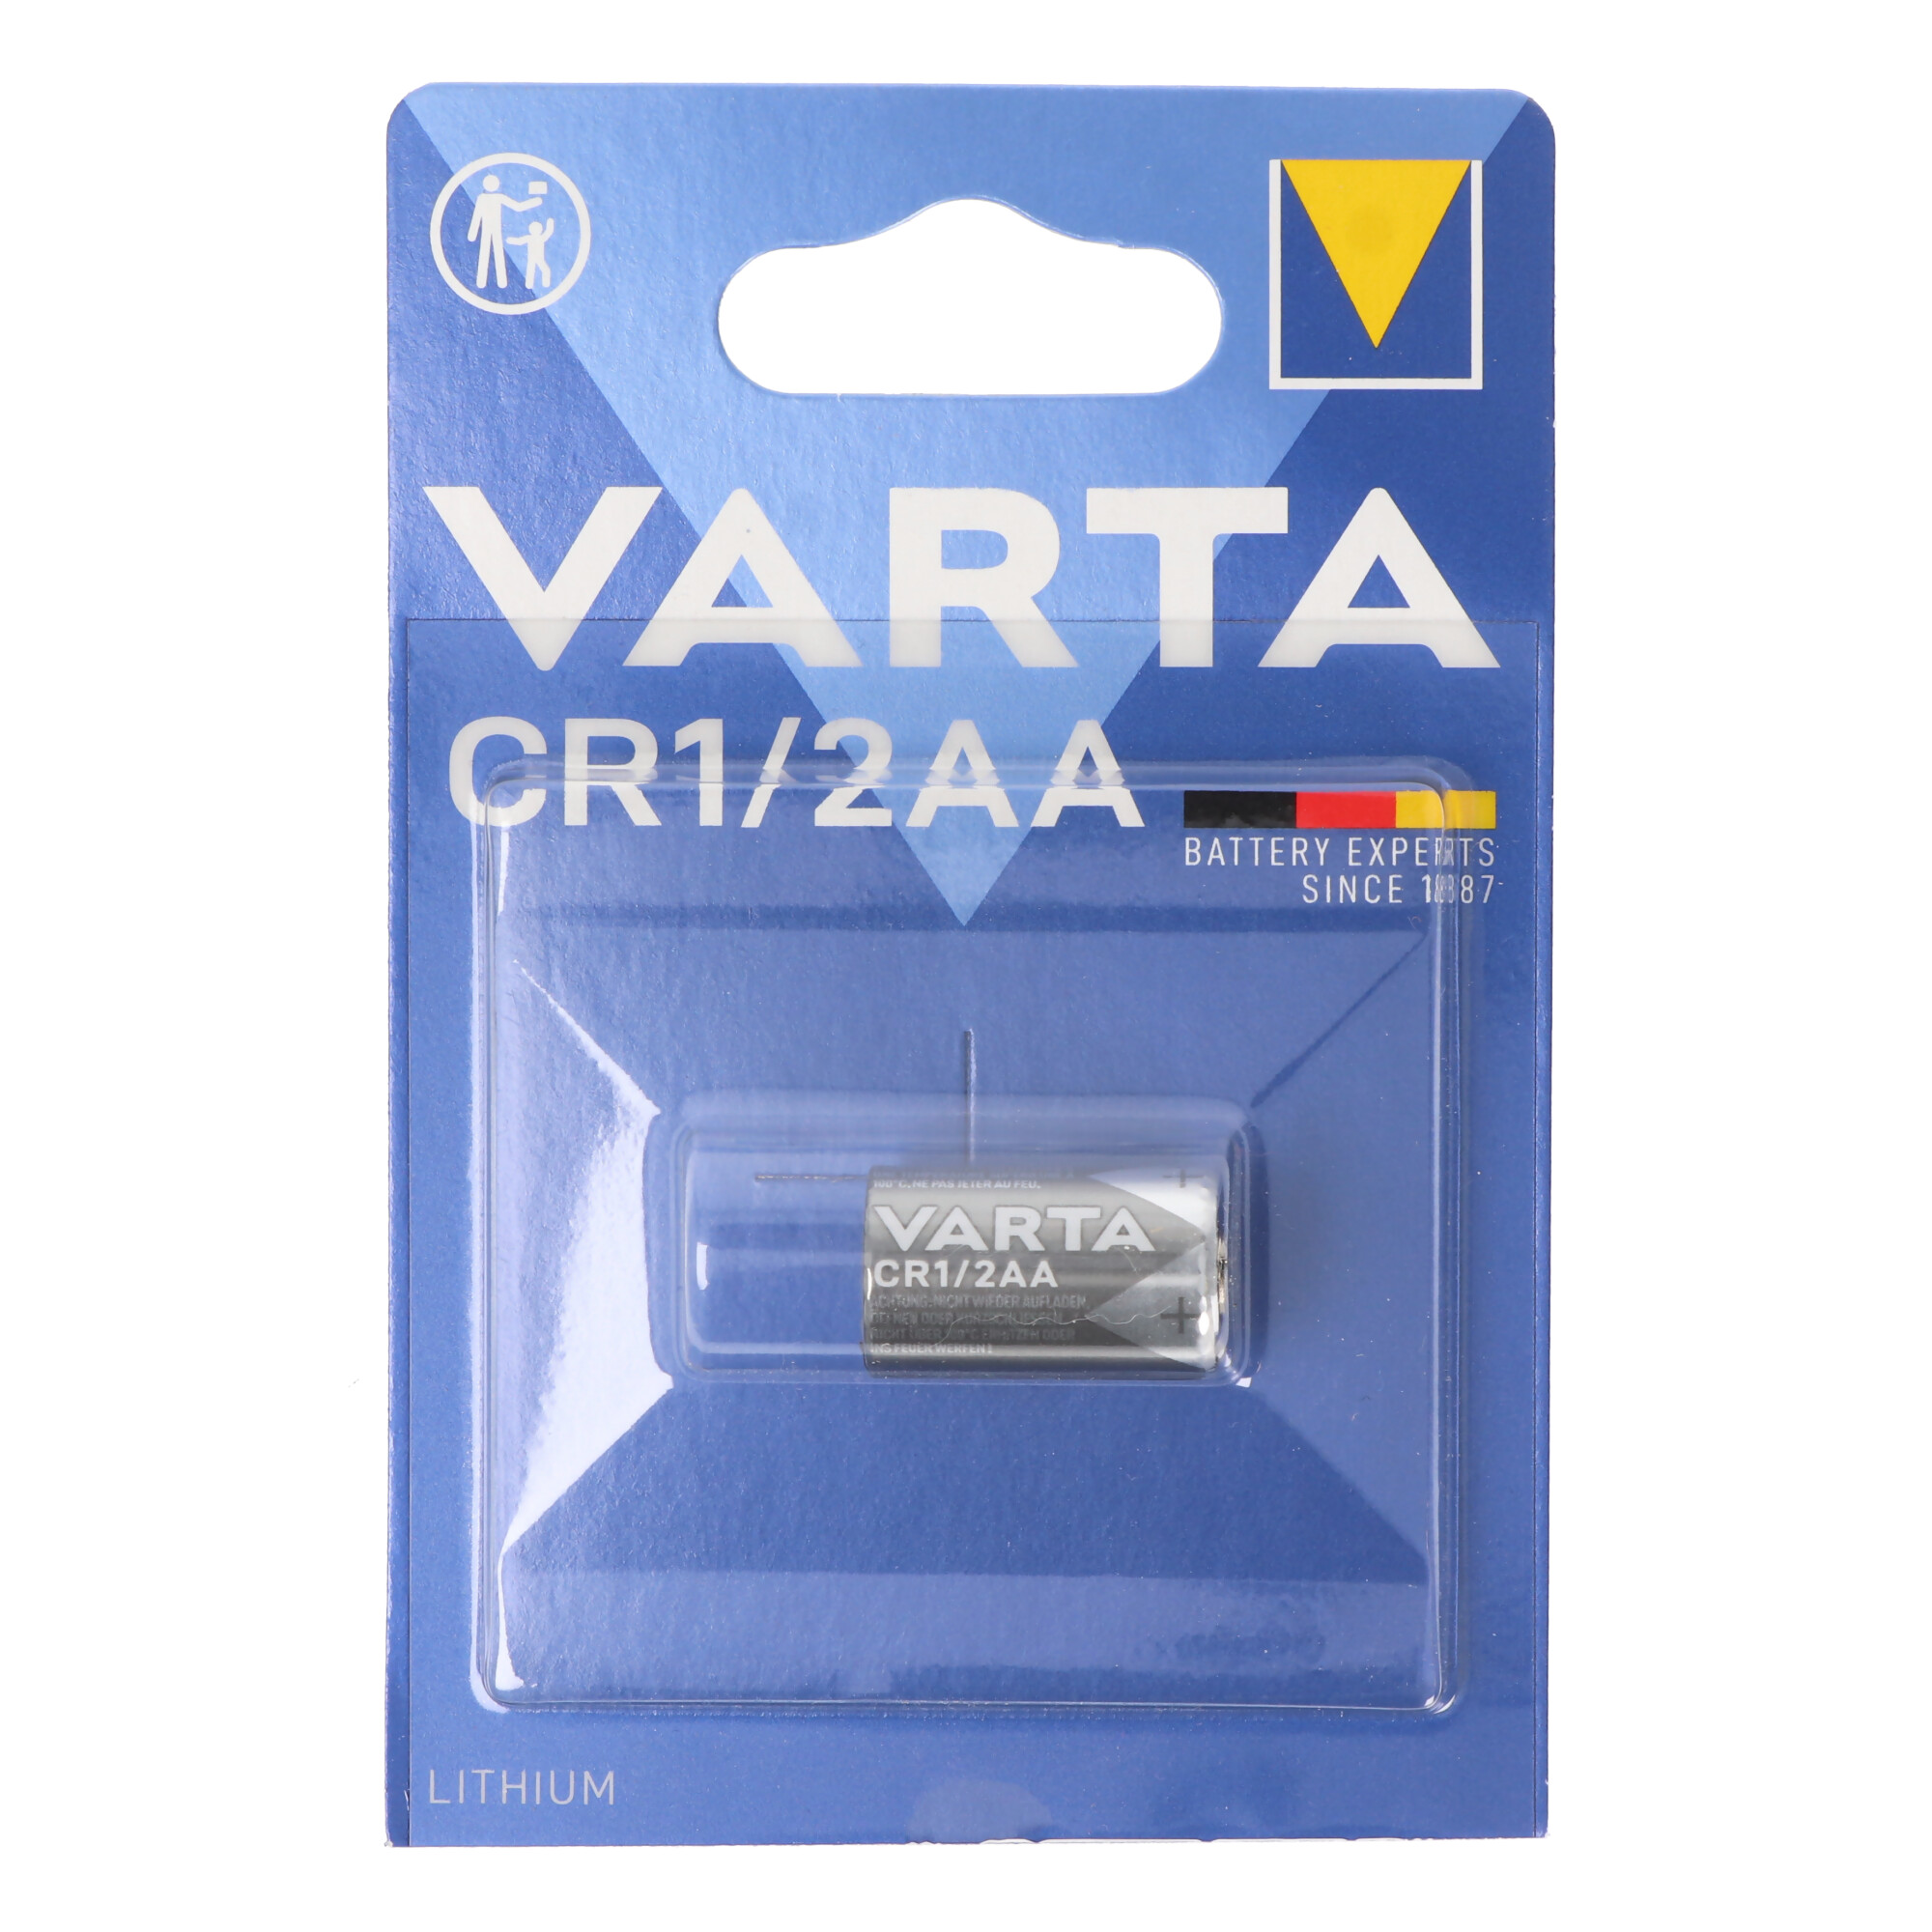 Varta Lithium CR 1/2 AA Varta 6127 3,0V 950mAh, Polung beachten